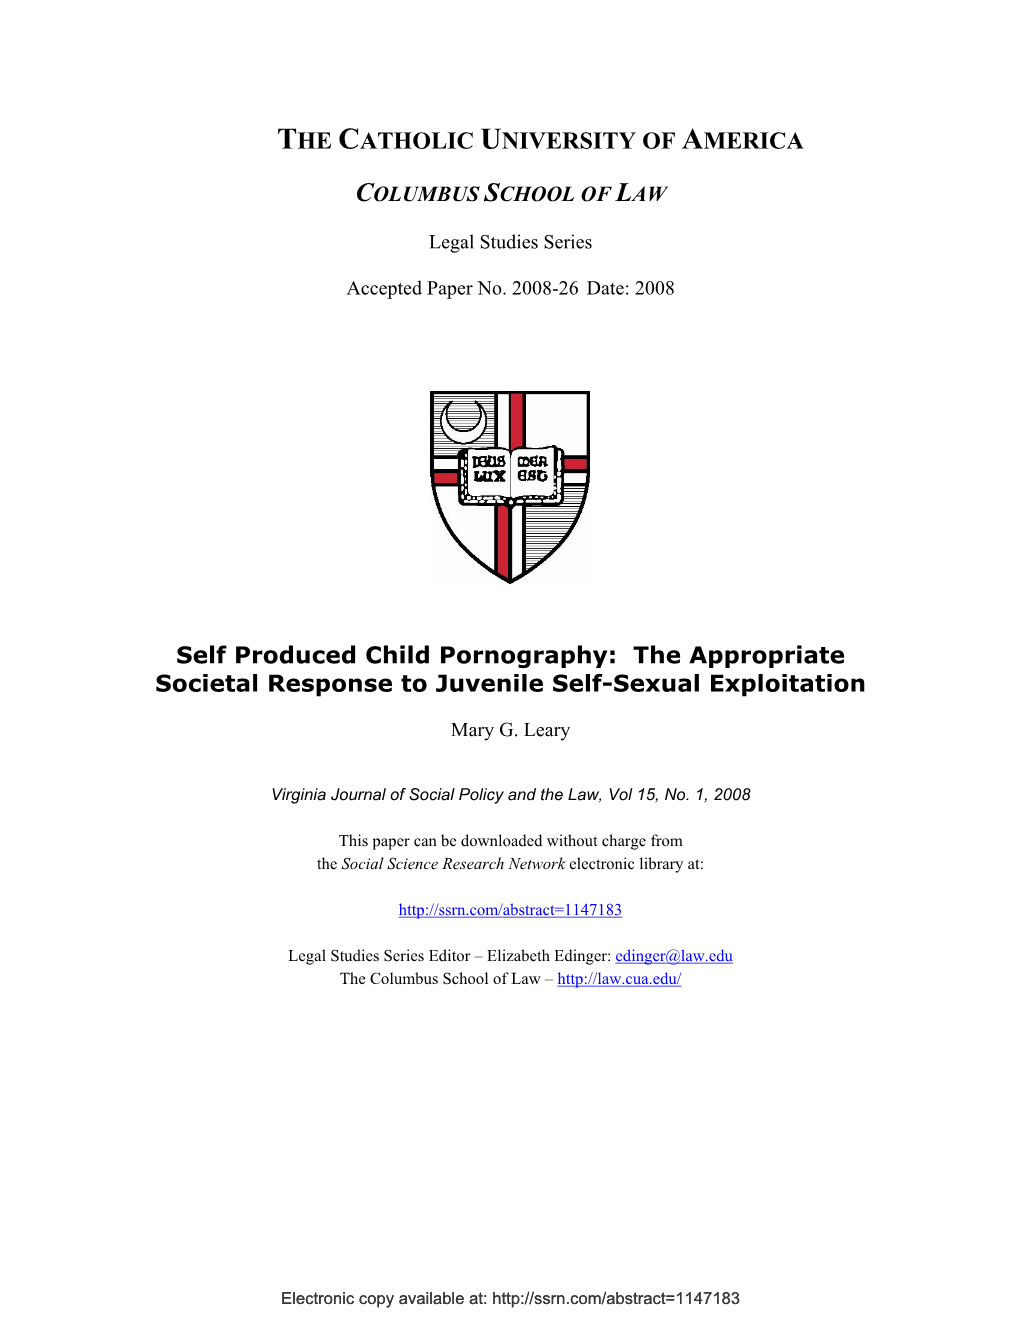 Self Produced Child Pornography: the Appropriate Societal Response to Juvenile Self-Sexual Exploitation